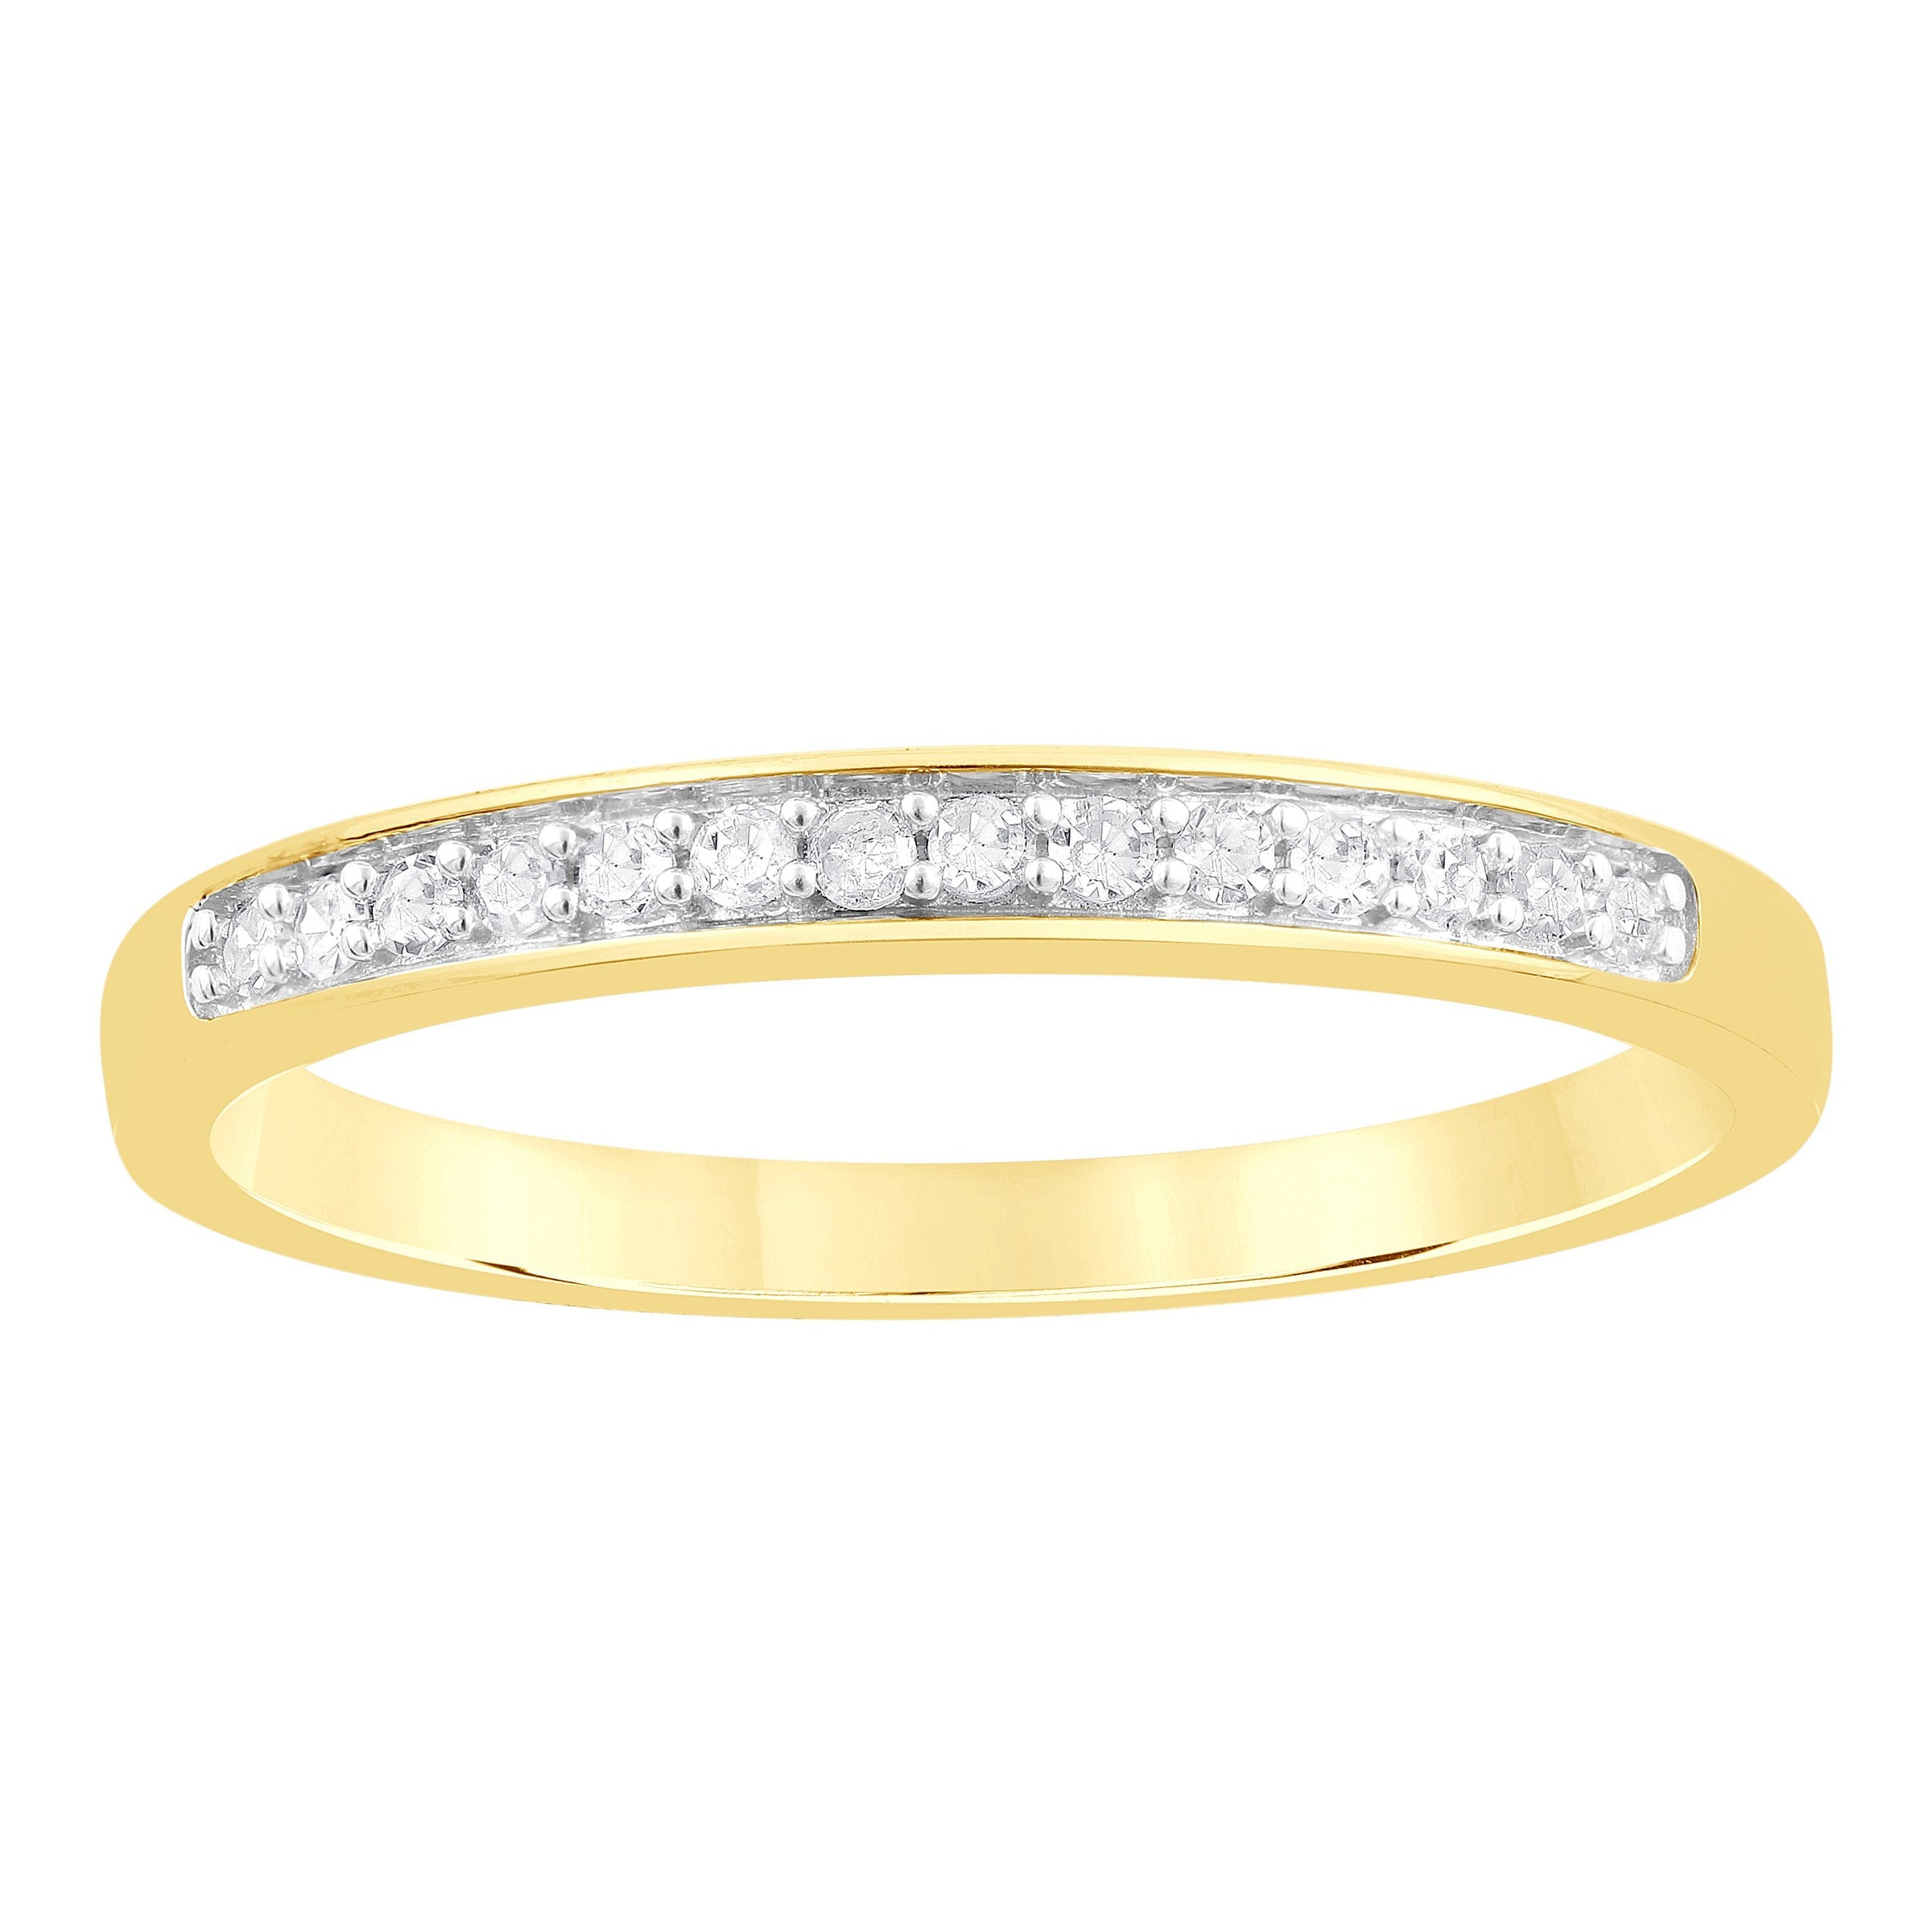 9ct Yellow Gold Diamond Set Eternity Ring Rings Bevilles 